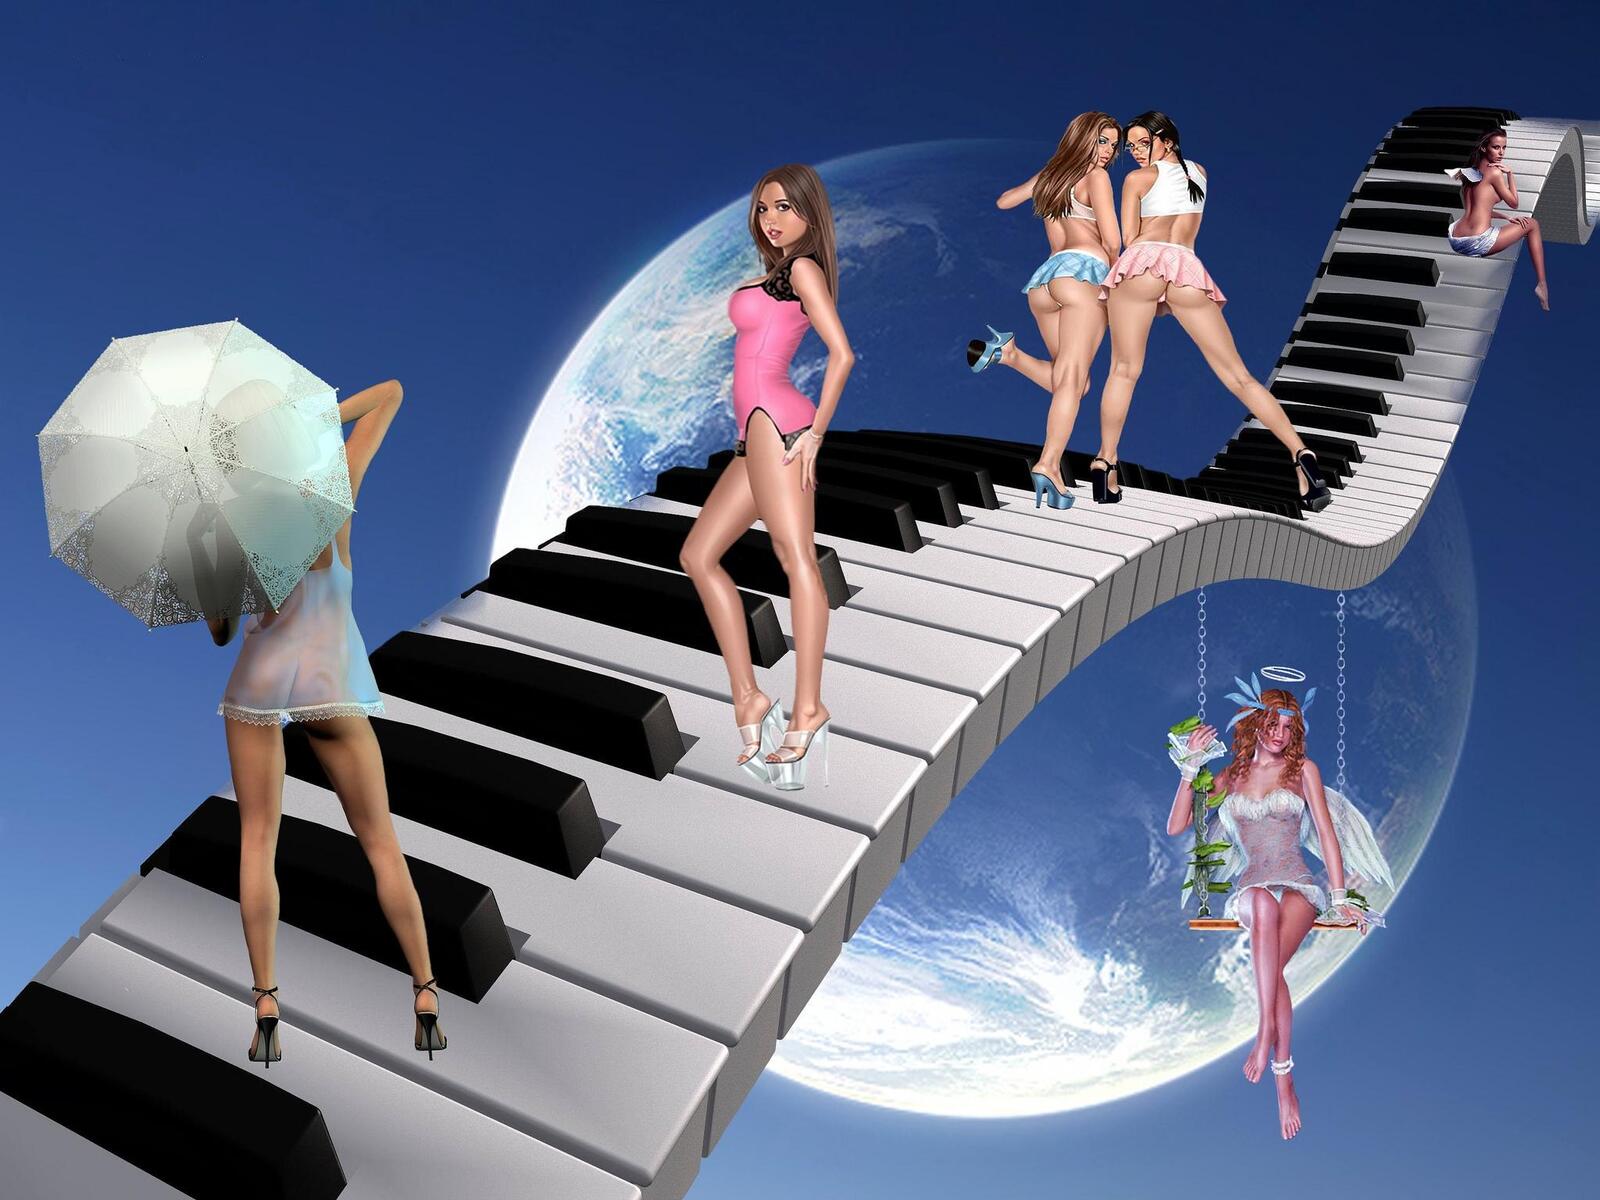 Wallpapers sky keys virtual girls on the desktop